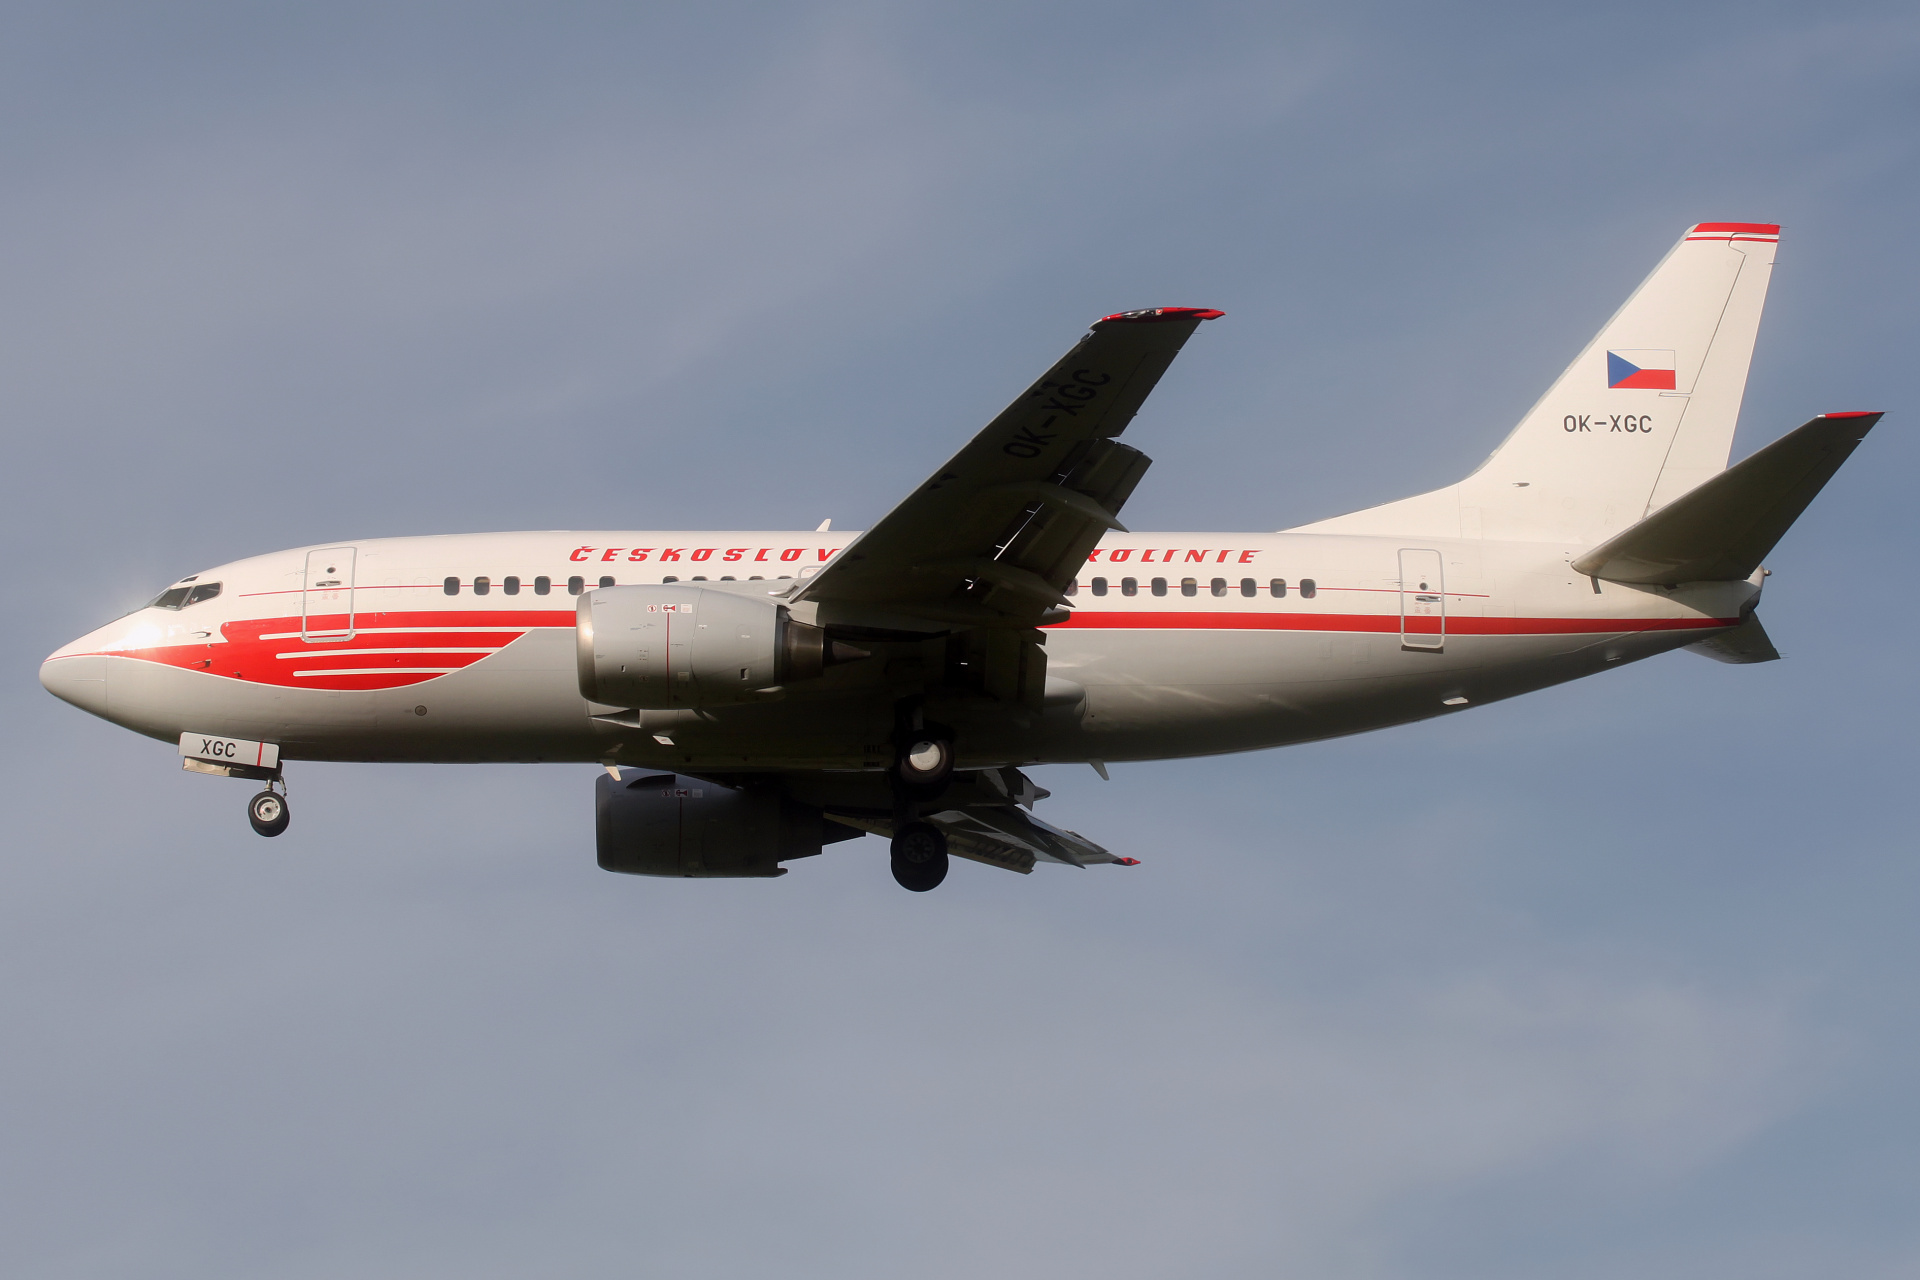 OK-XGC (retro livery) (Aircraft » EPWA Spotting » Boeing 737-500 » CSA Czech Airlines)